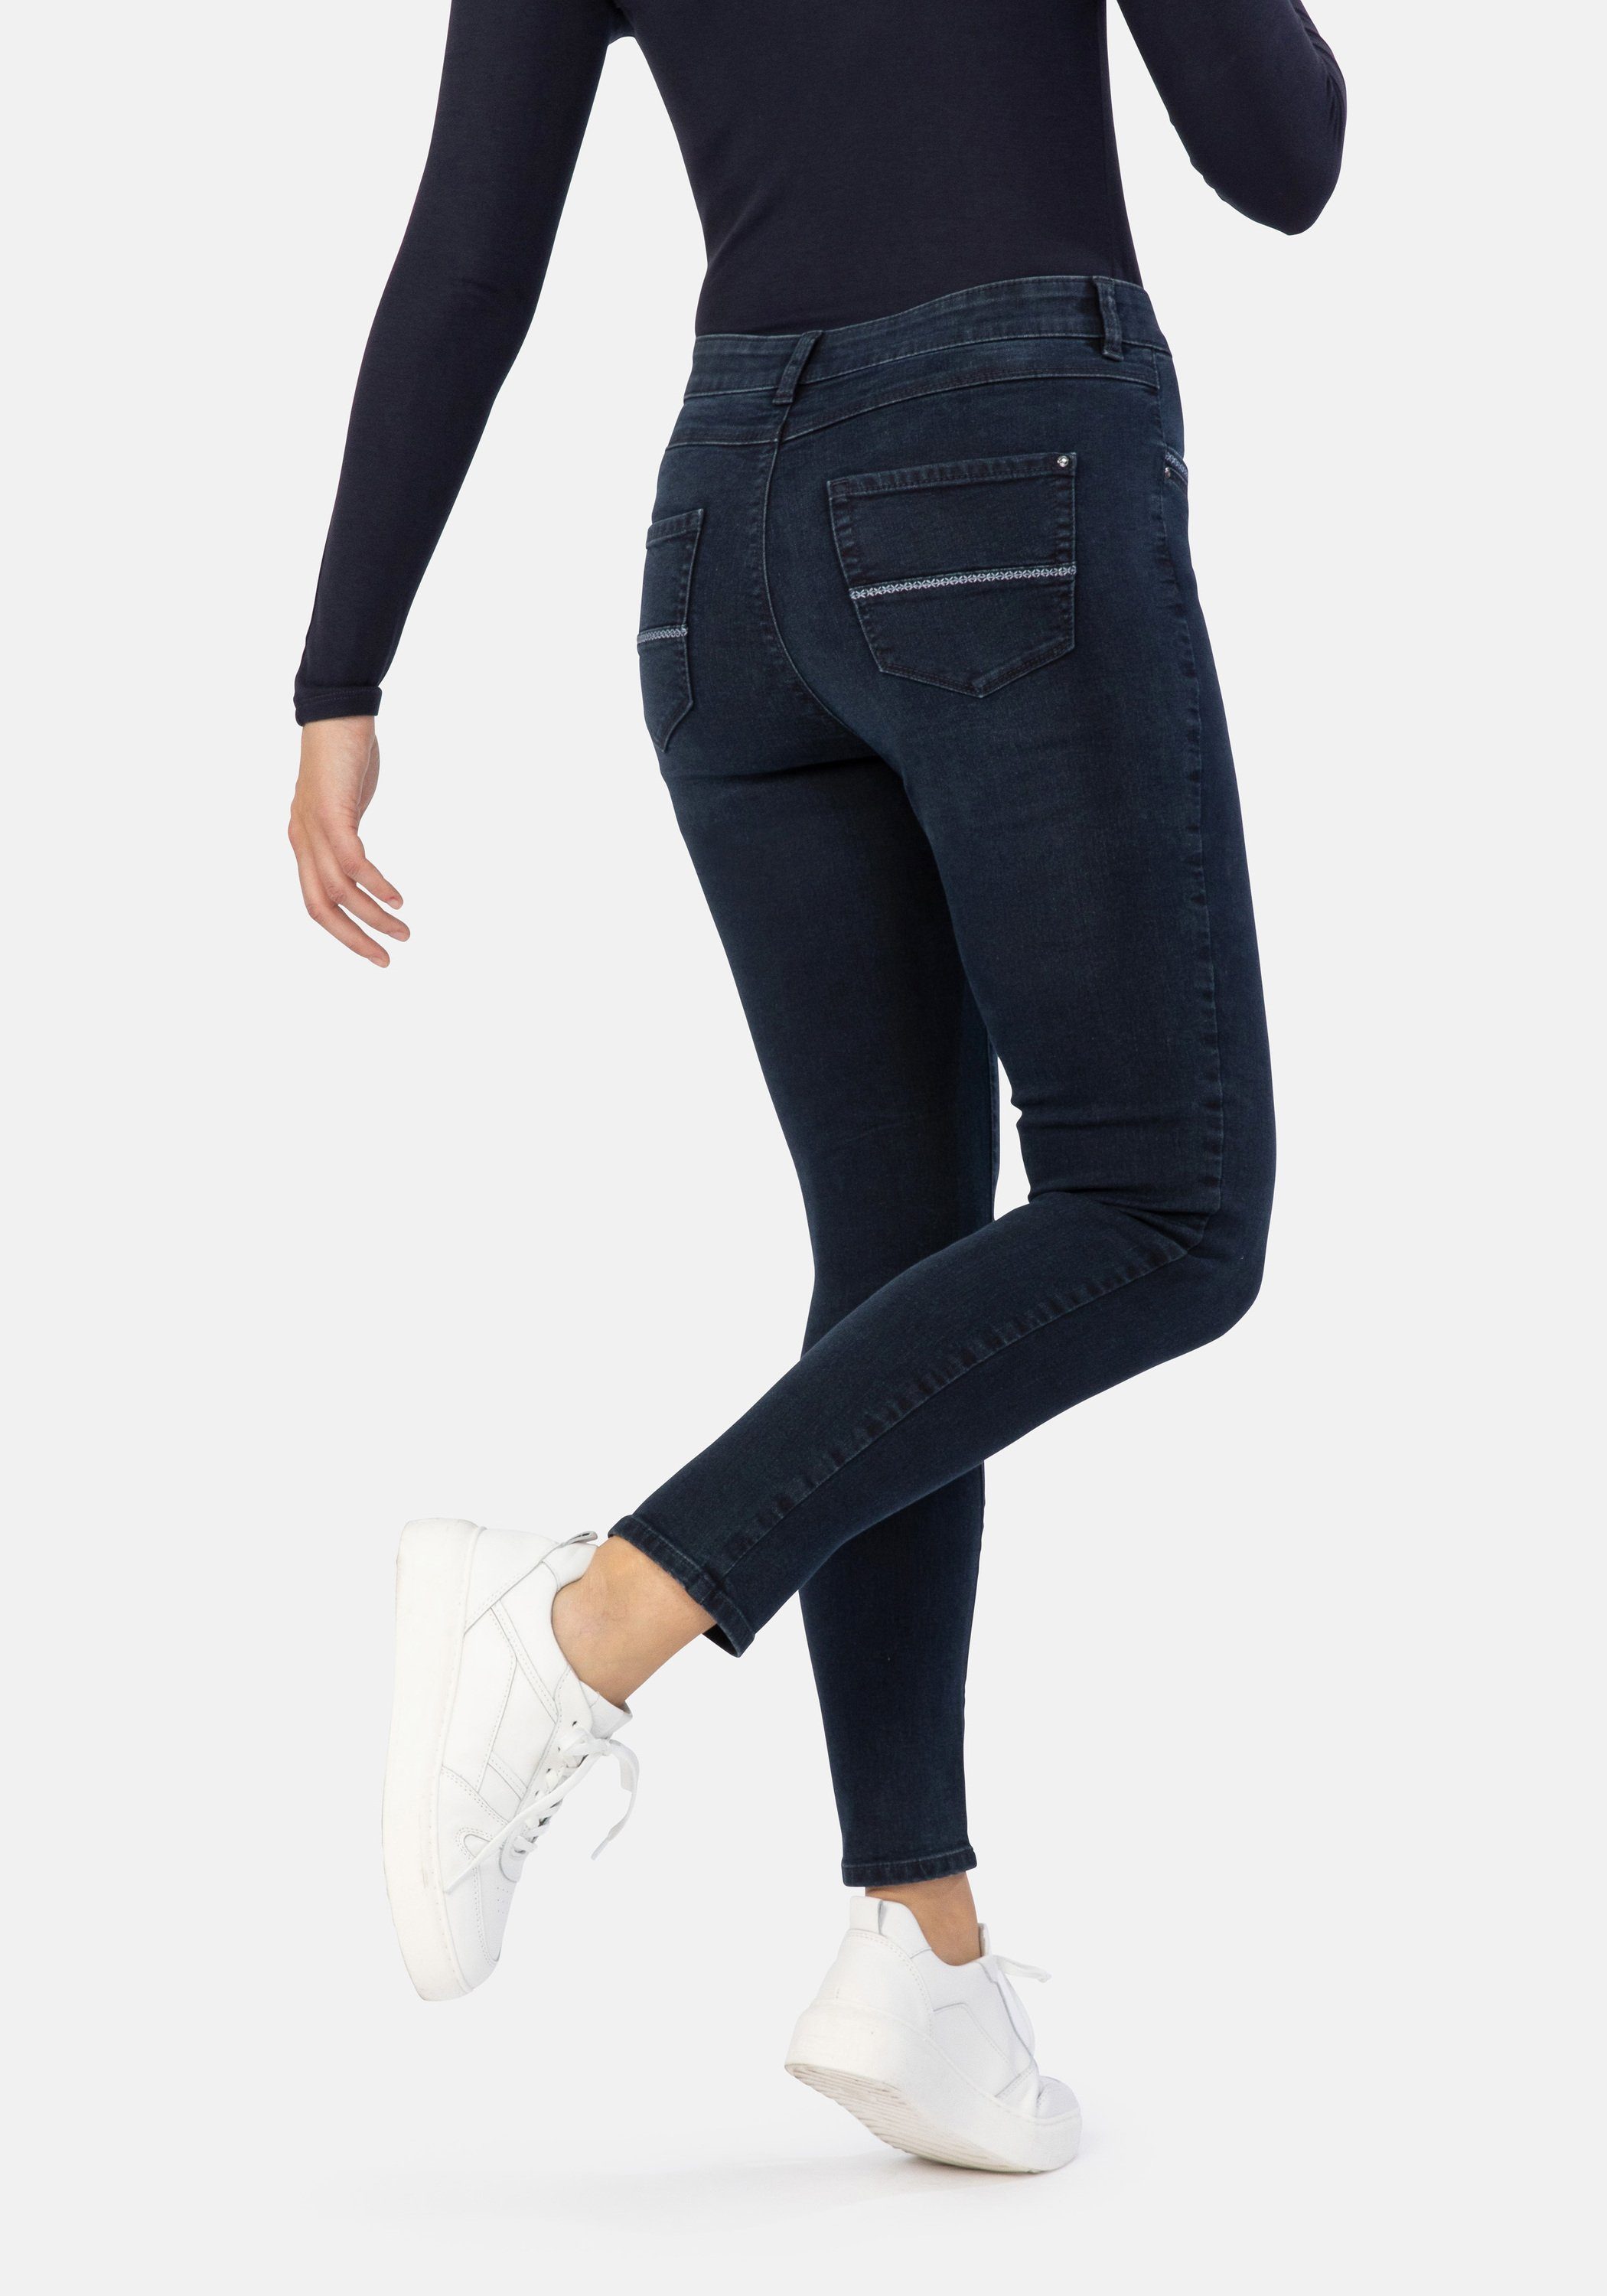 Fexxi 5-Pocket-Jeans authentic Skinny Rio STOOKER wash WOMEN Denim Fit indigo Move